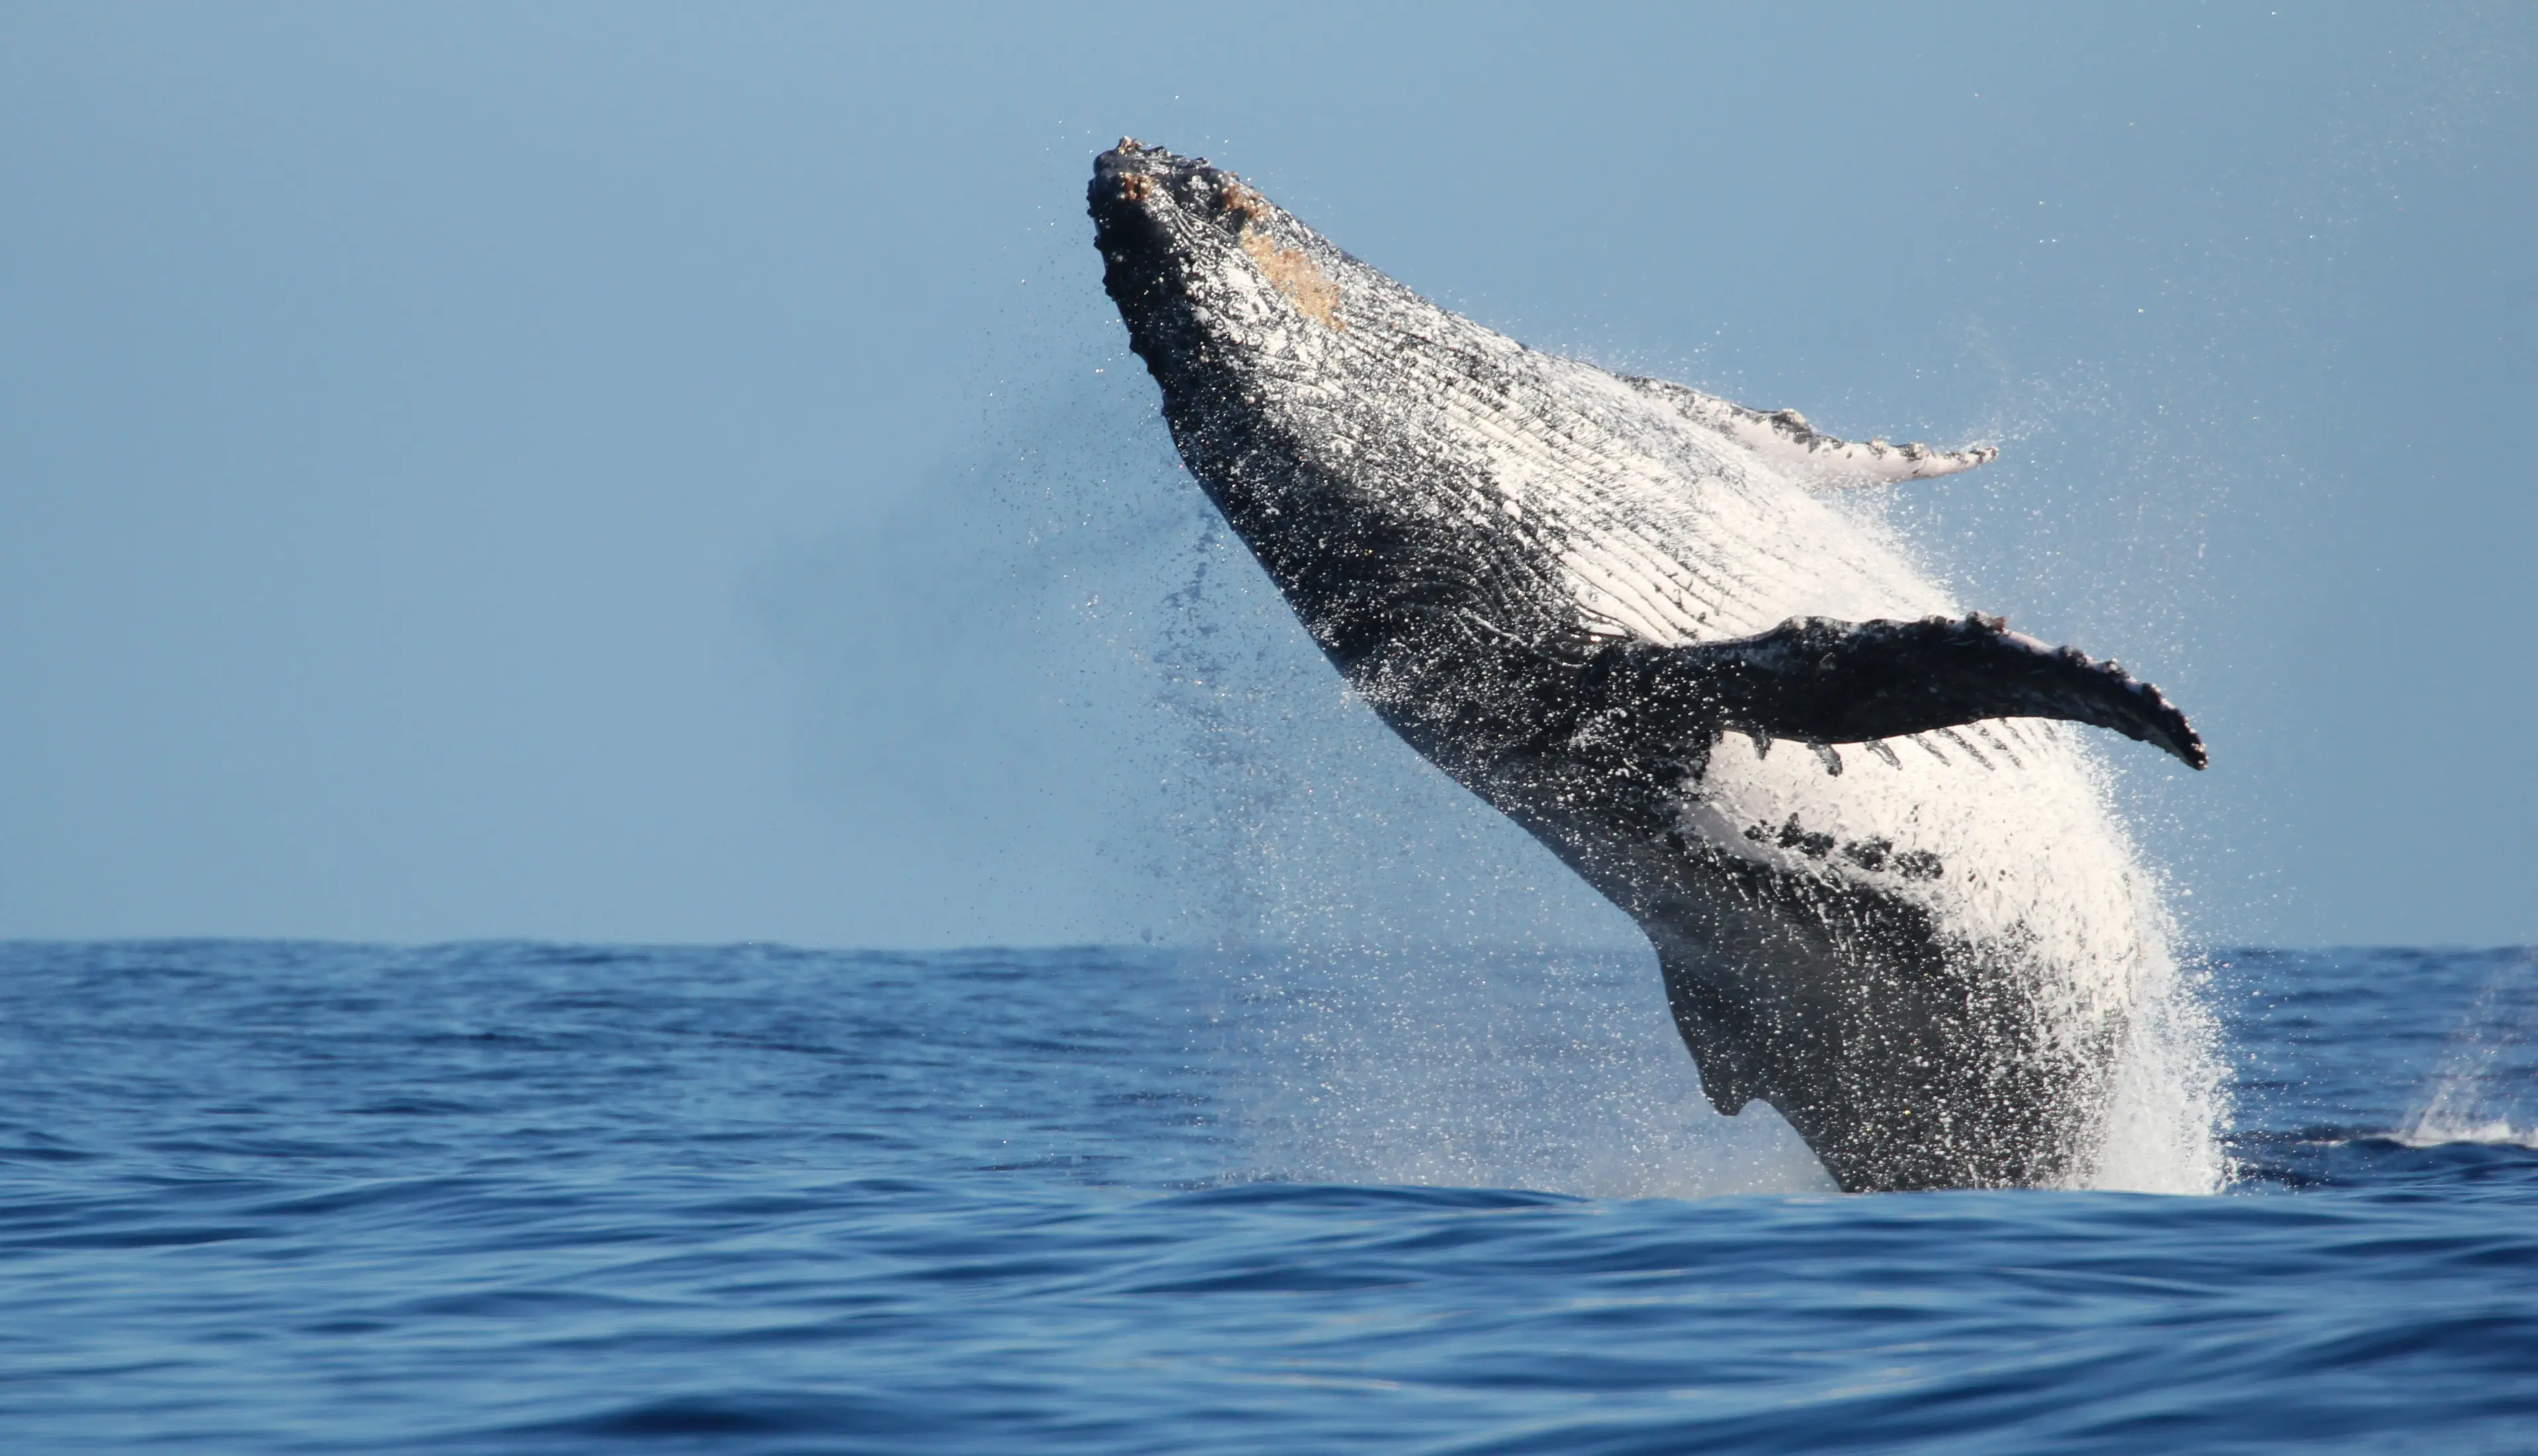 Impressive whale jump